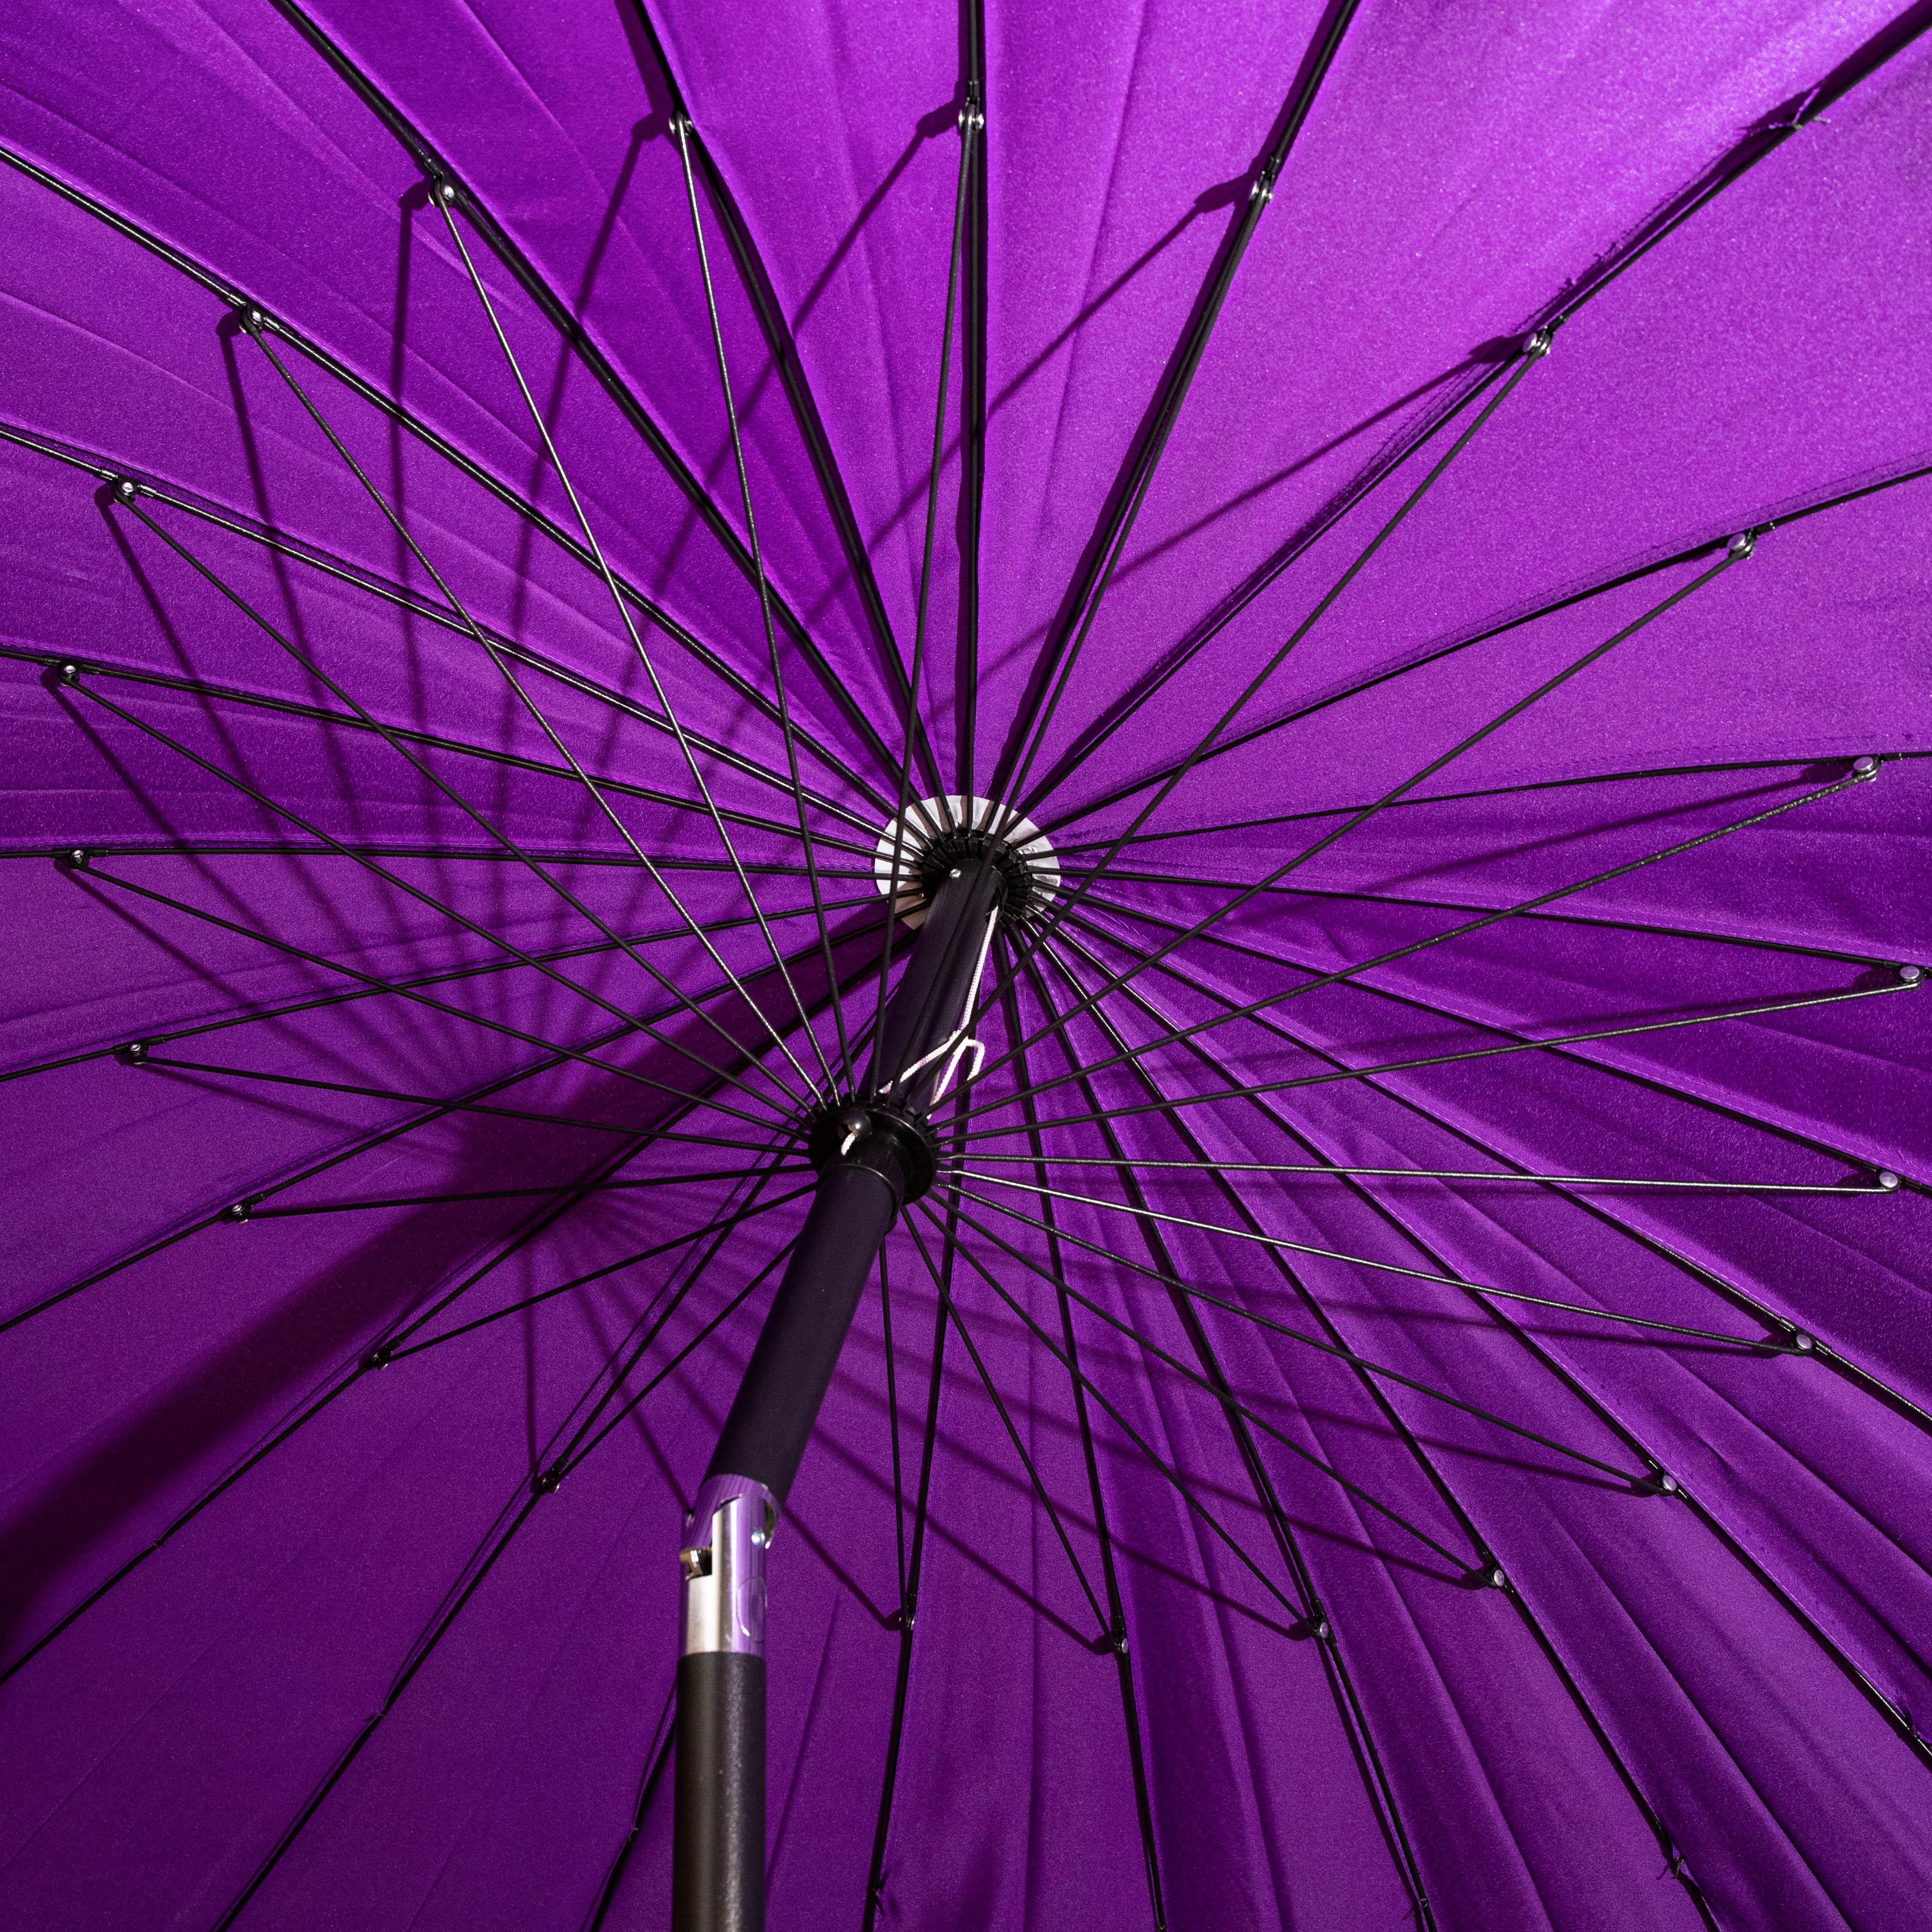 2.6m Aluminium Shanghai Garden Patio Sun Shade Parasol with Crank & Tilt in Purple